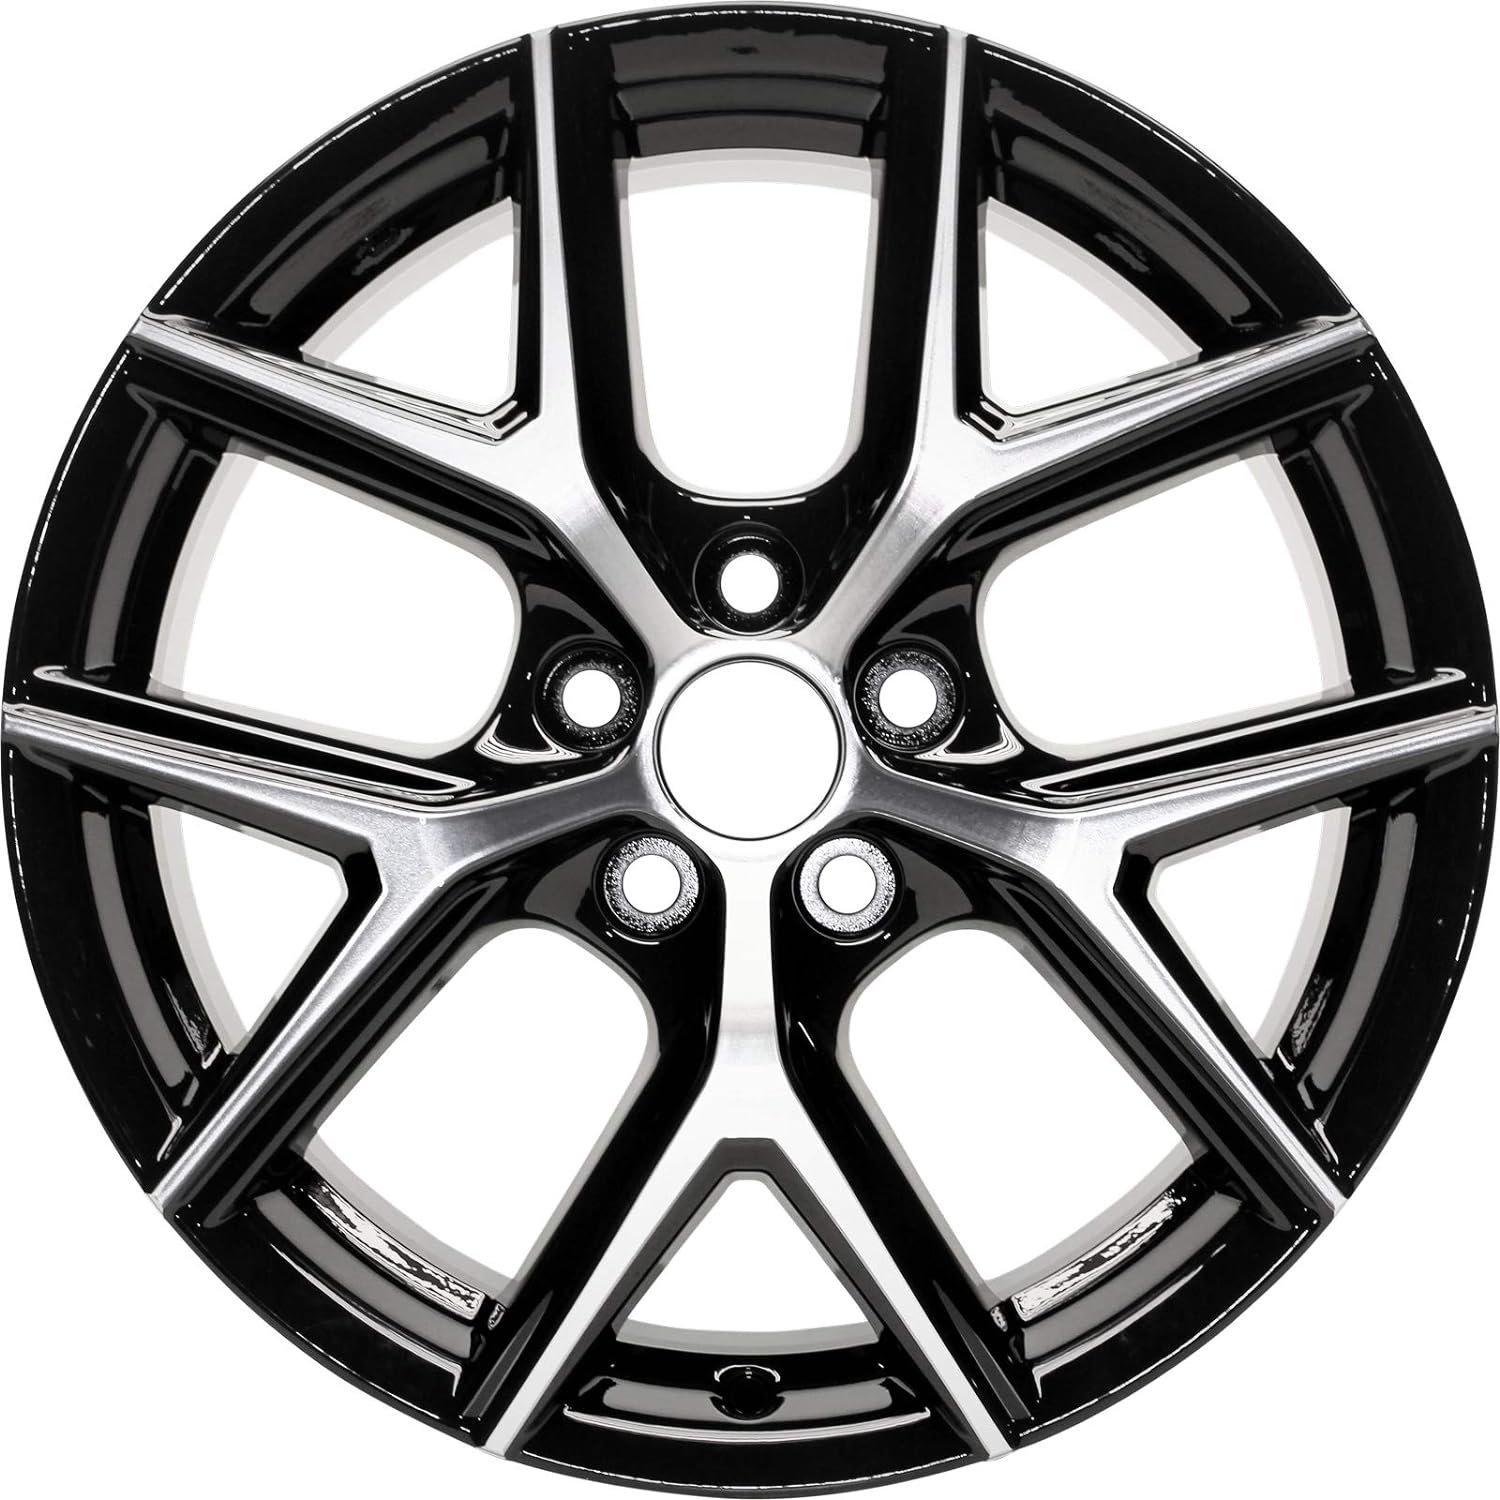 New 18×7.5″ Wheel Rim Review